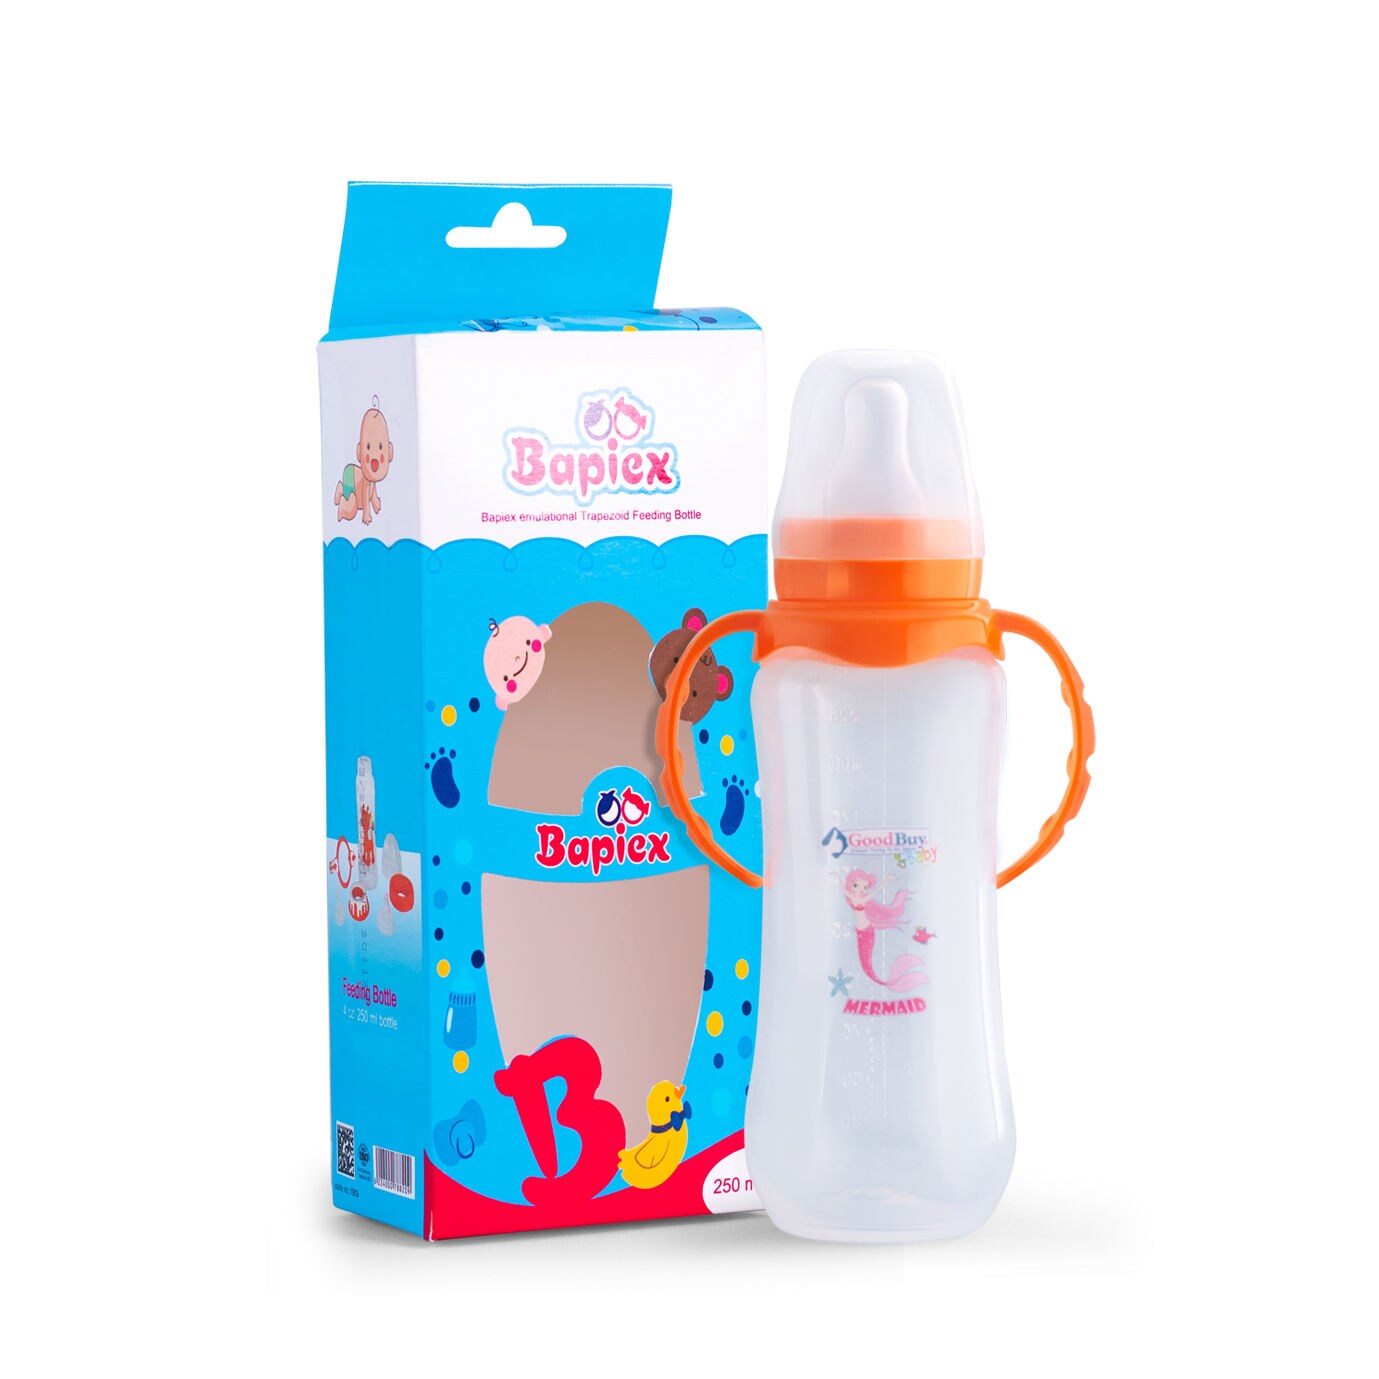 Bapiex Baby Feeding Bottle, 250 ml